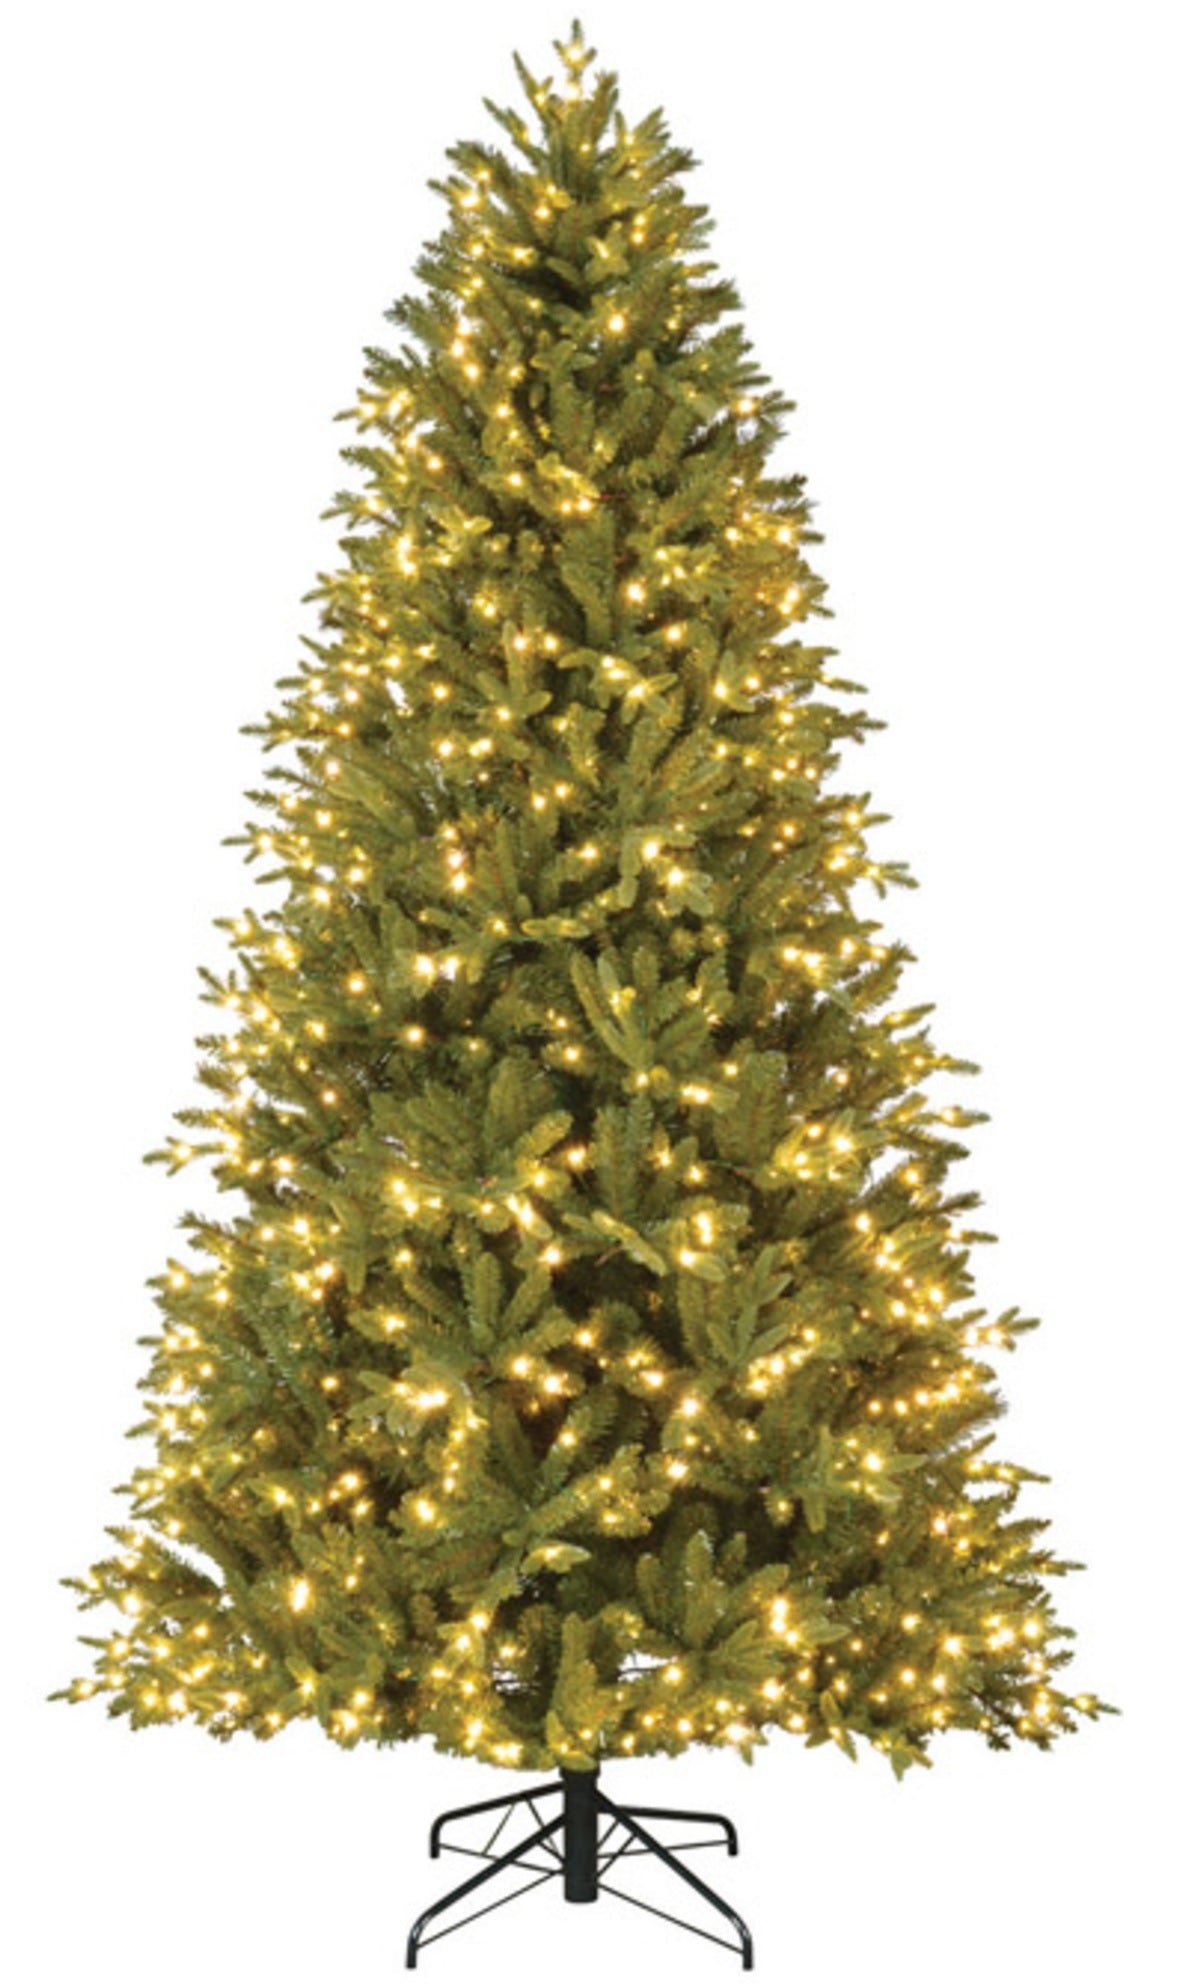 Polygroup TG76P4903D00 Hinge Artificial Christmas Tree, 1000 Lights